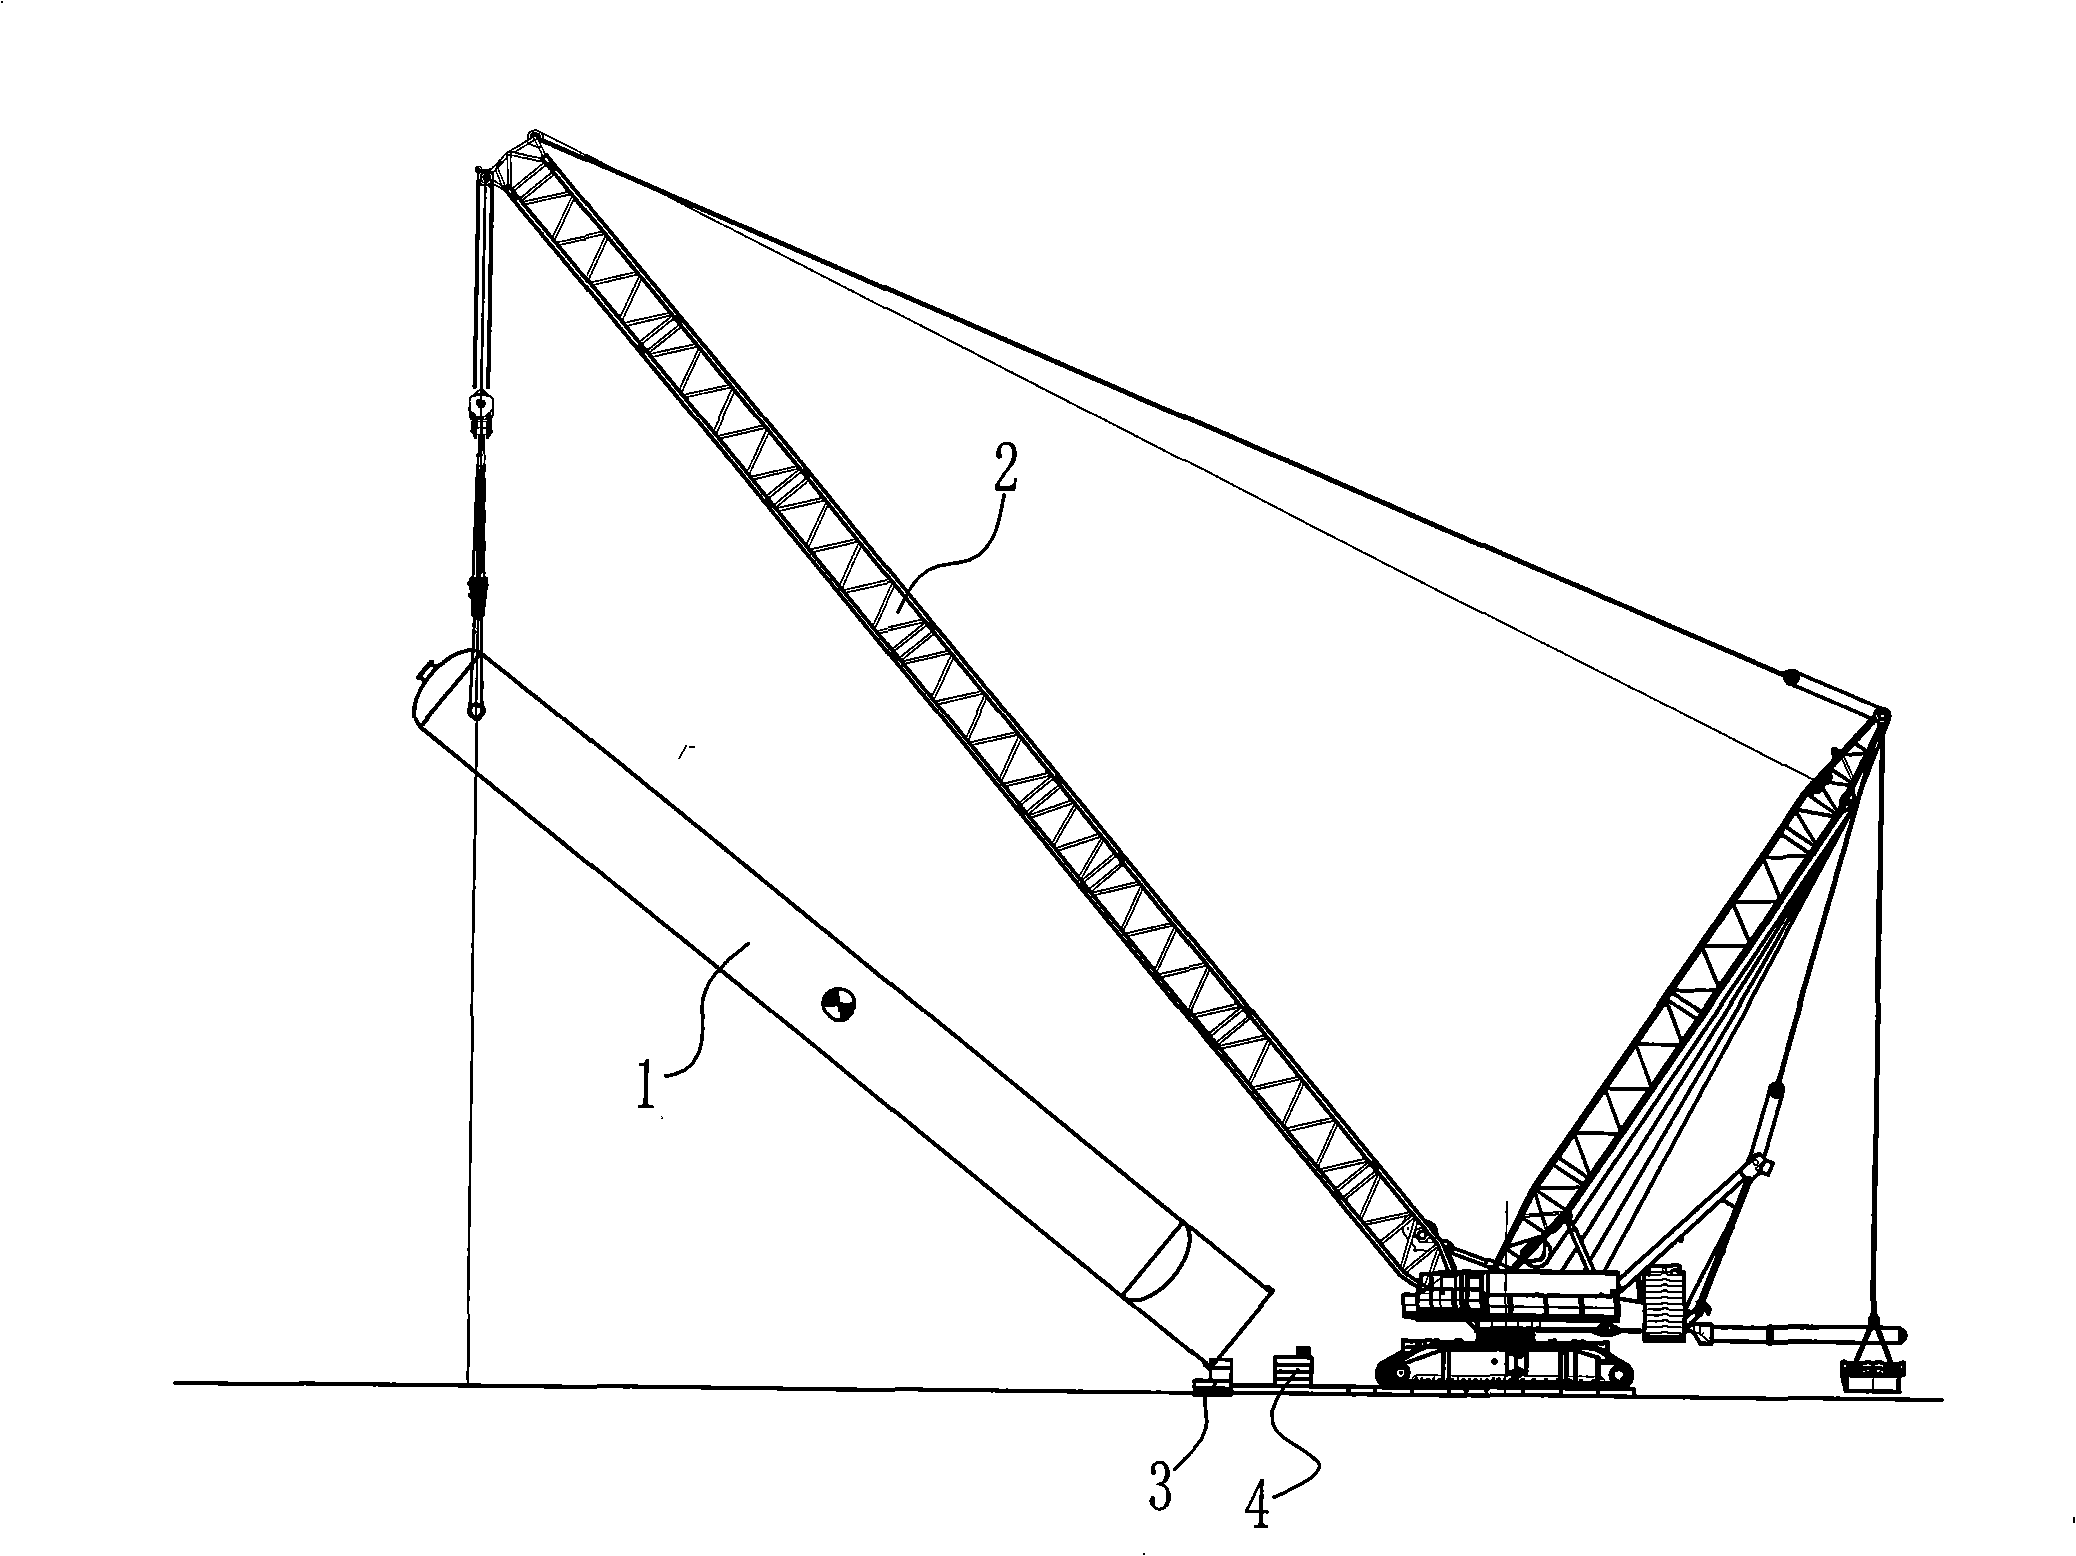 Turning hoisting method for vertical type apparatus